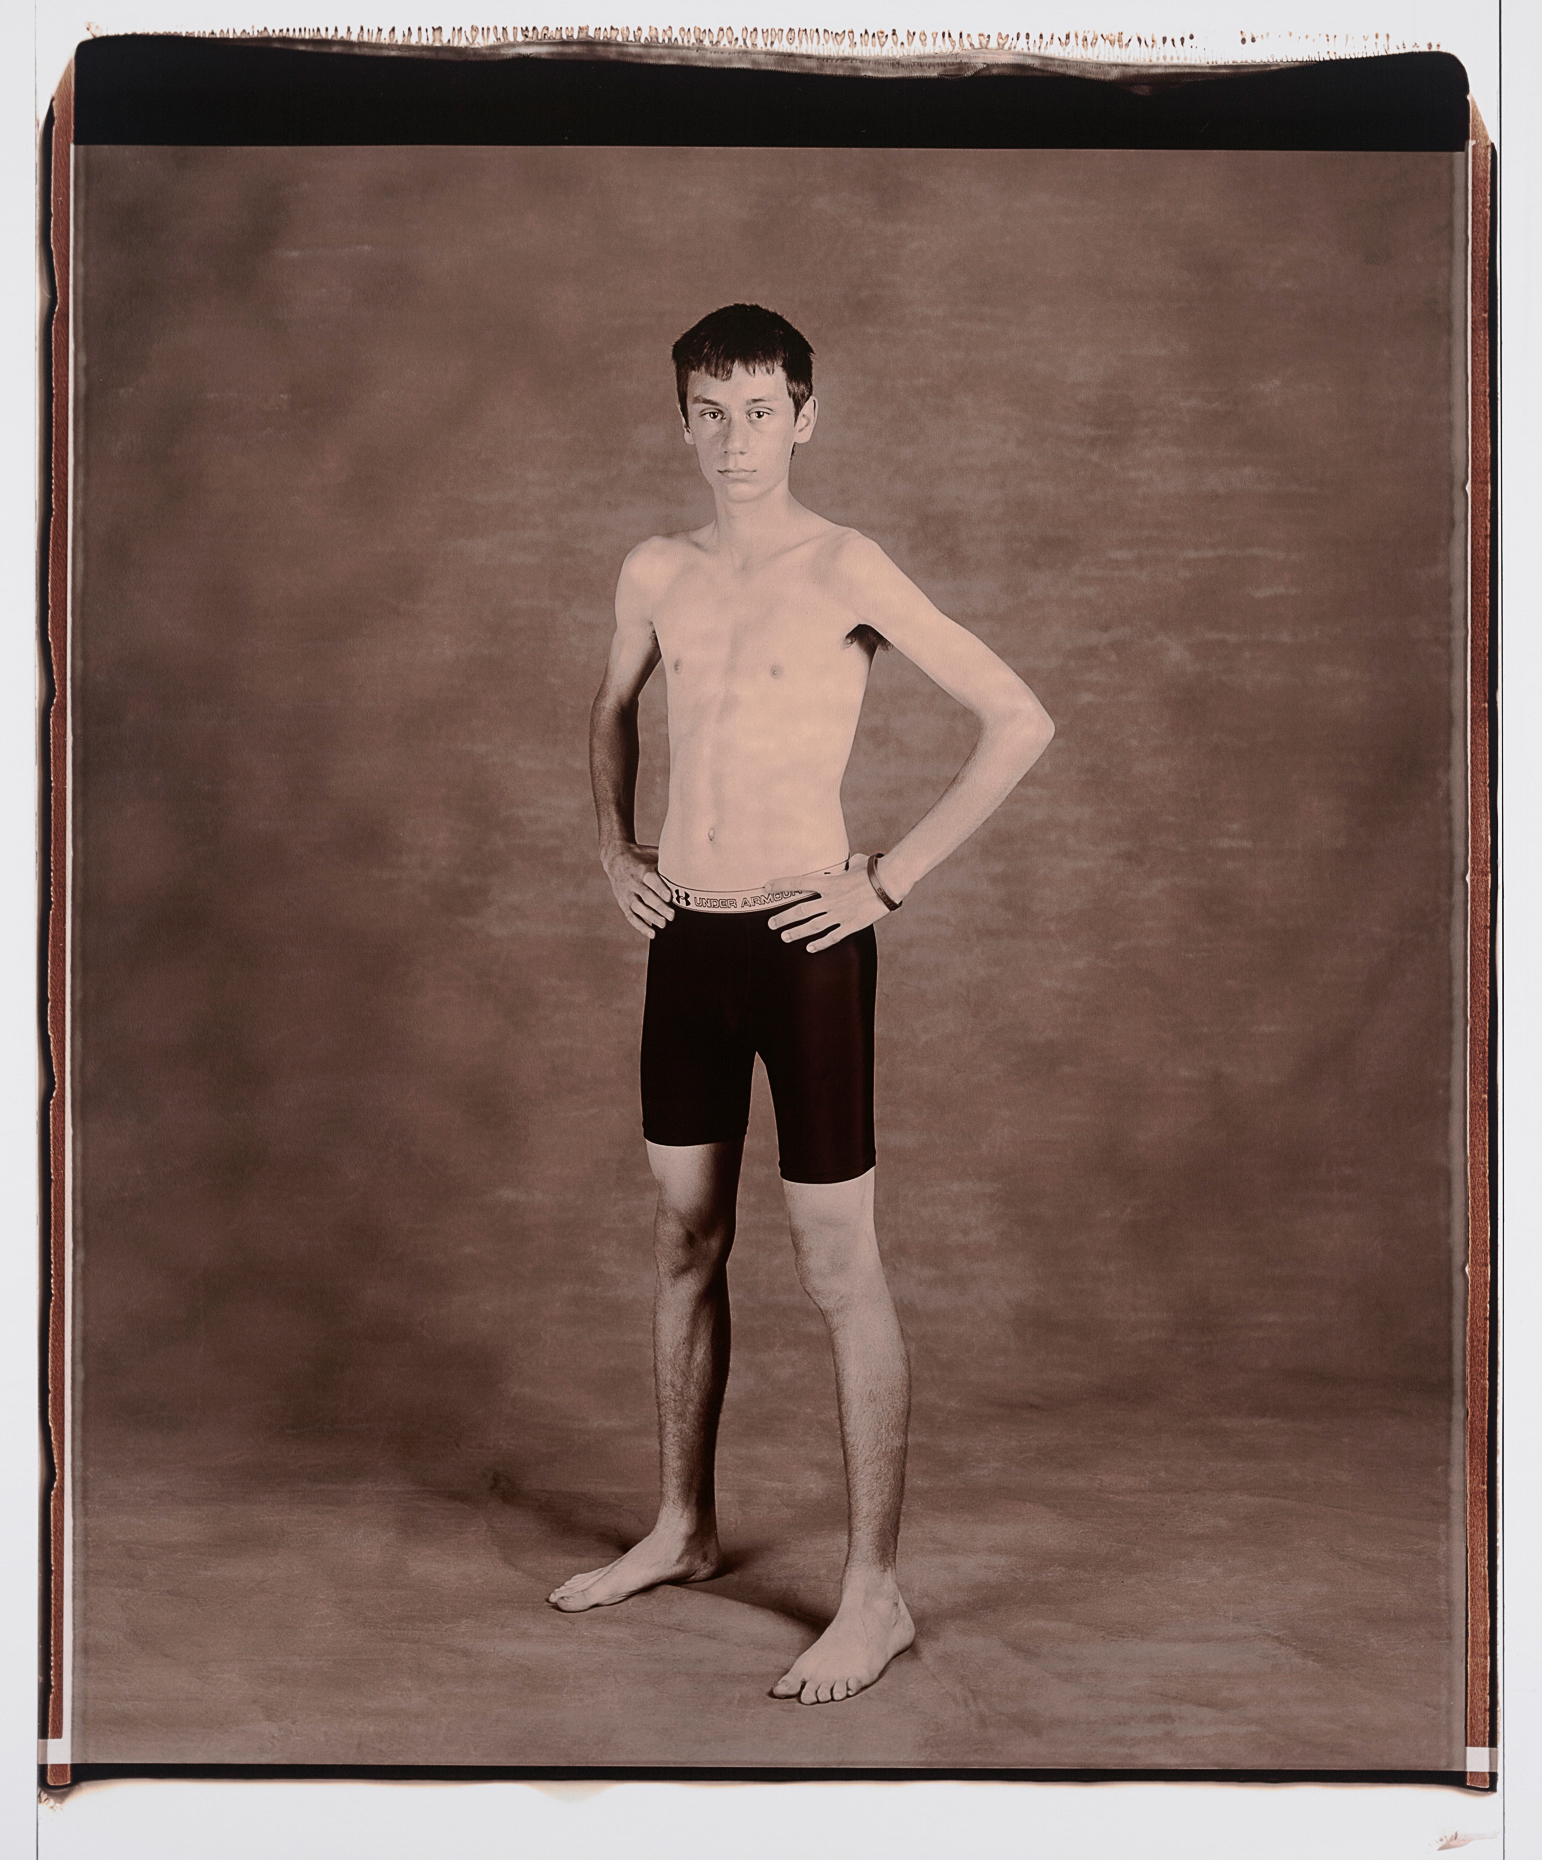 20x24" Black & White Polaroid portrait of lone male subject